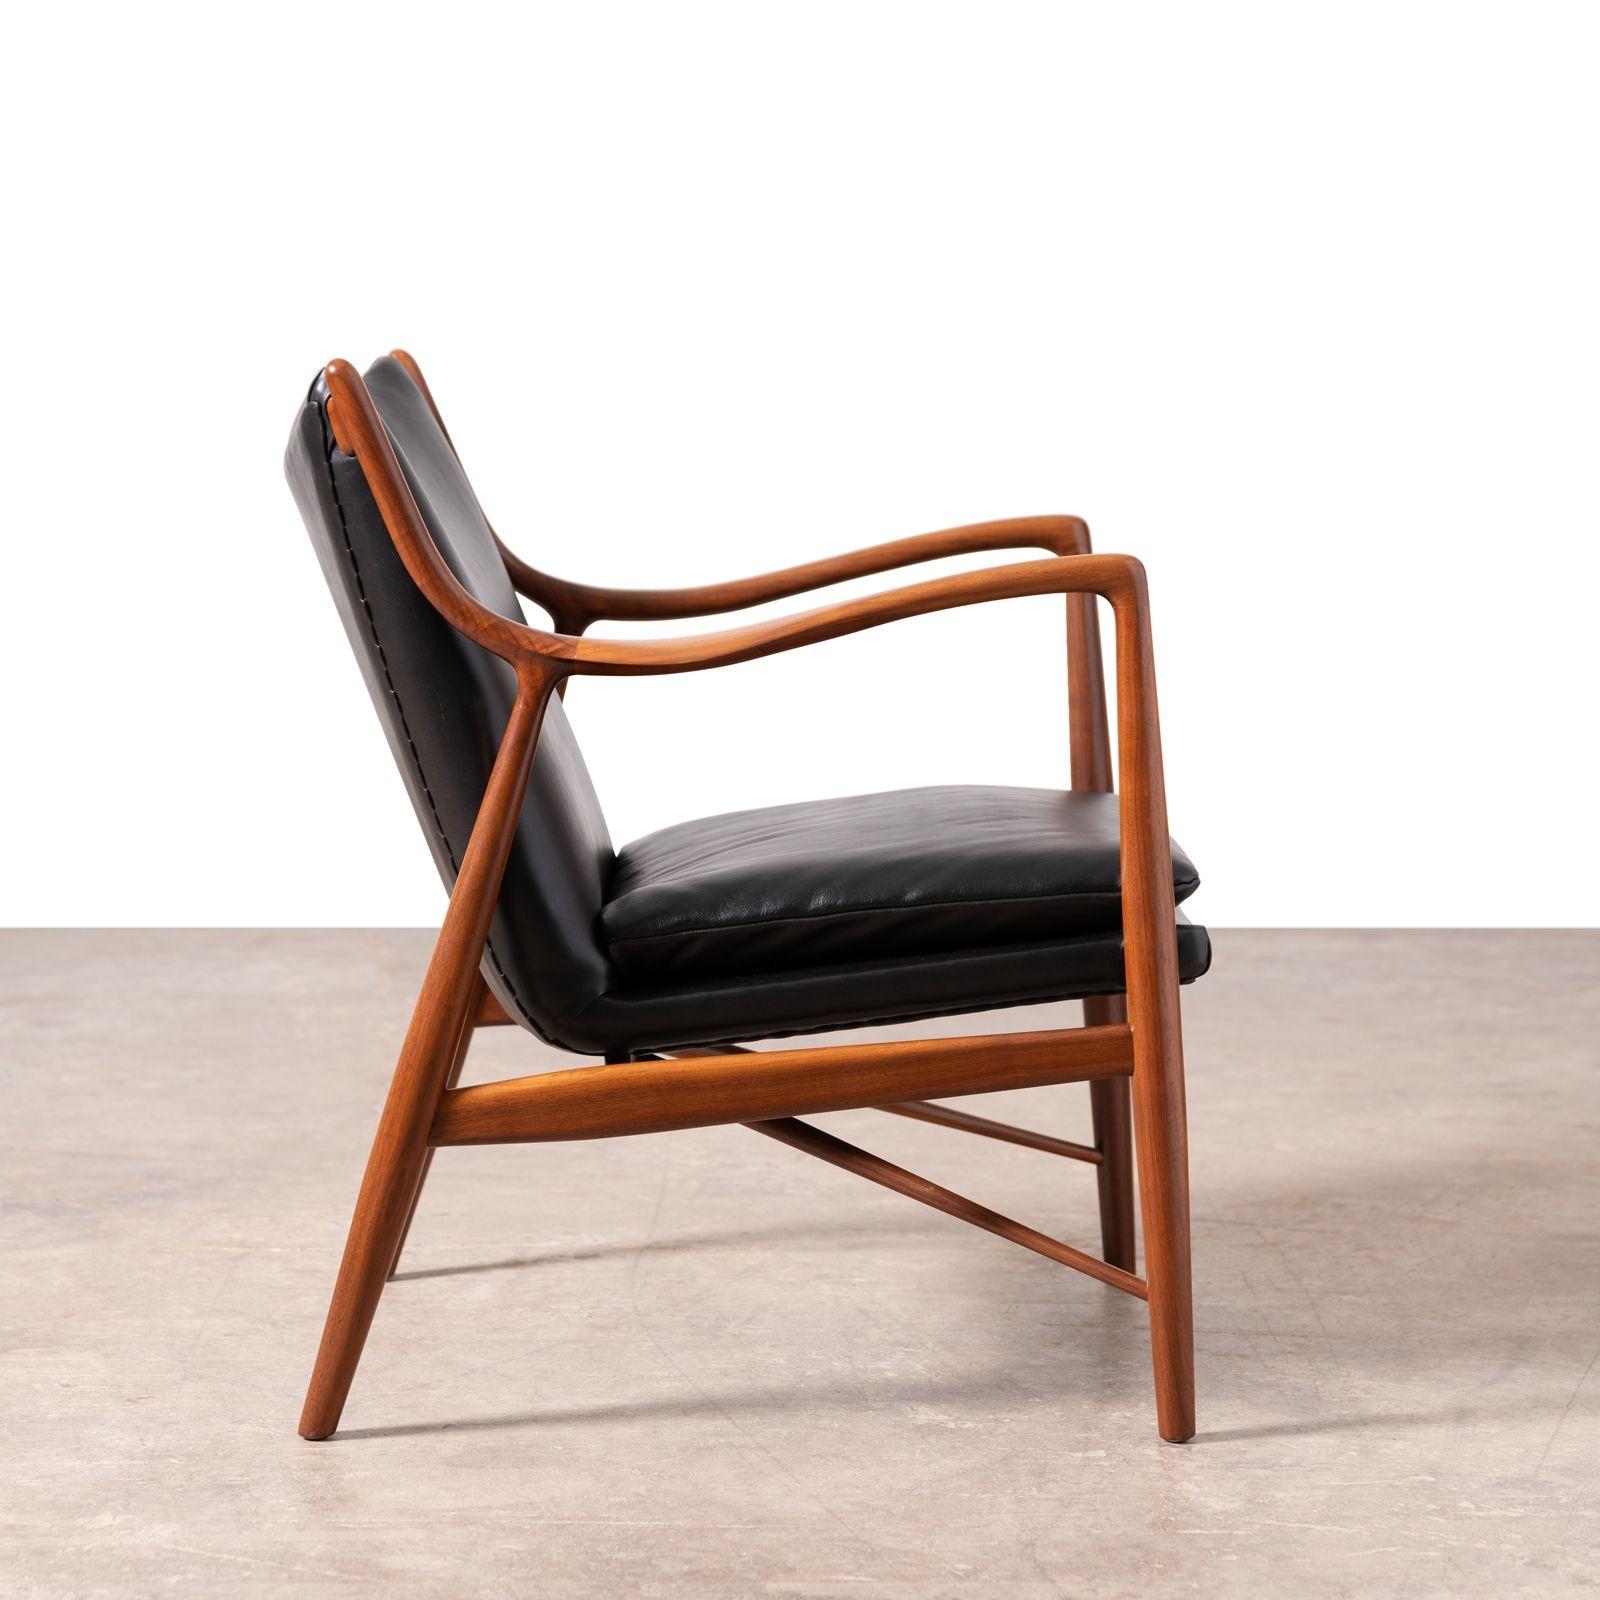 Finn Juhl NV-45 Scandinavian Lounge Chairs in Walnut and Black Leather 1950s For Sale 6